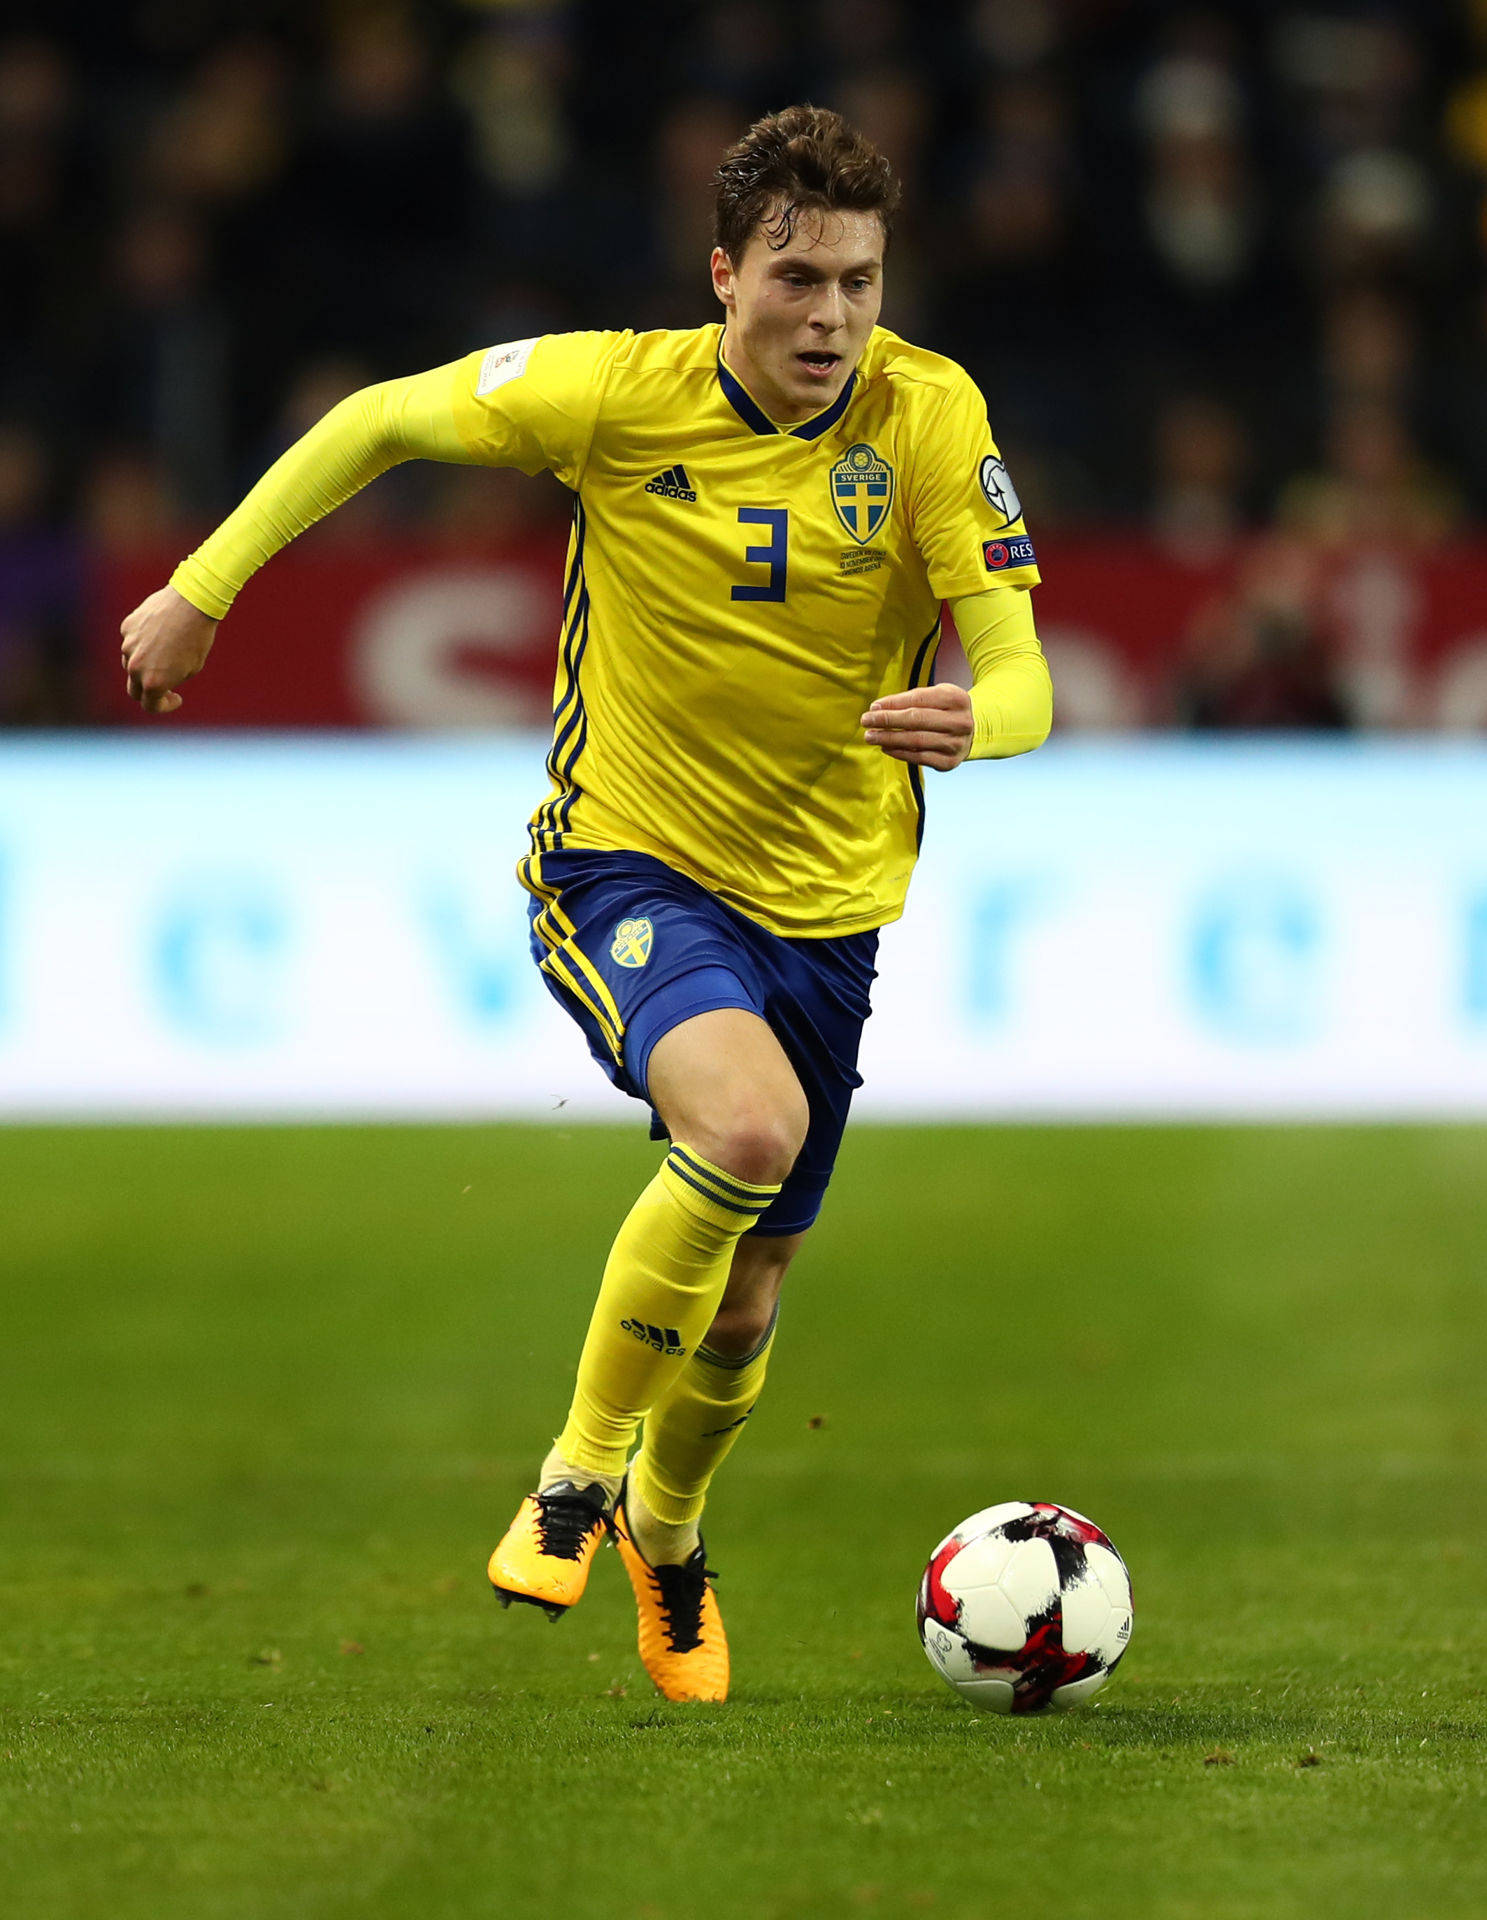 Swedish Footballer In Action.jpg Wallpaper